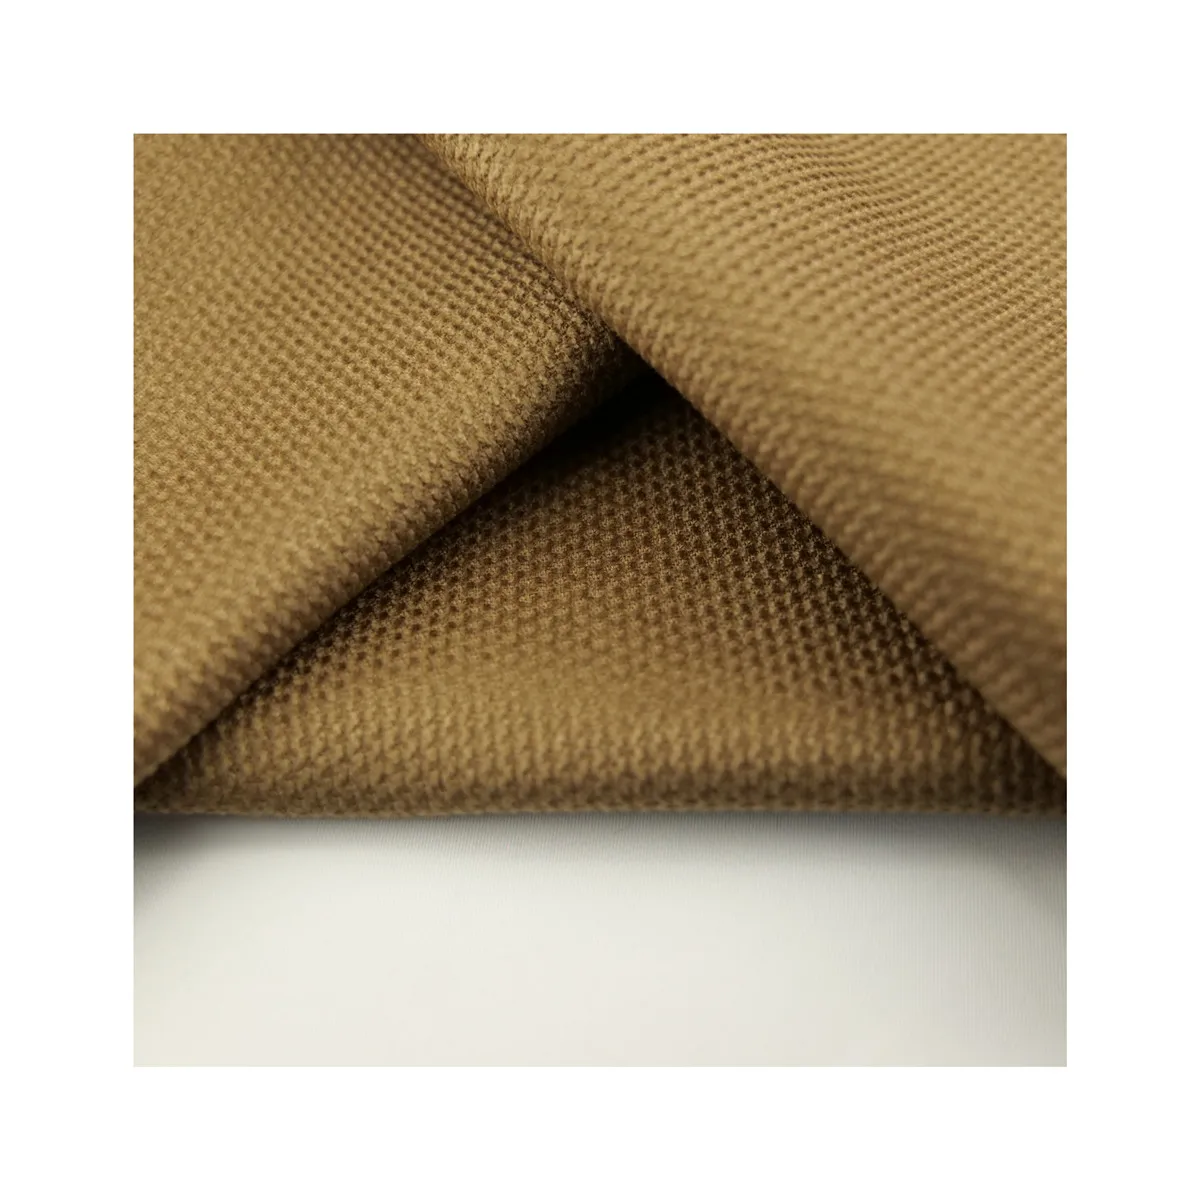 High performance 85% cotton 14% modal 1% spandex twill stretch khaki fabric